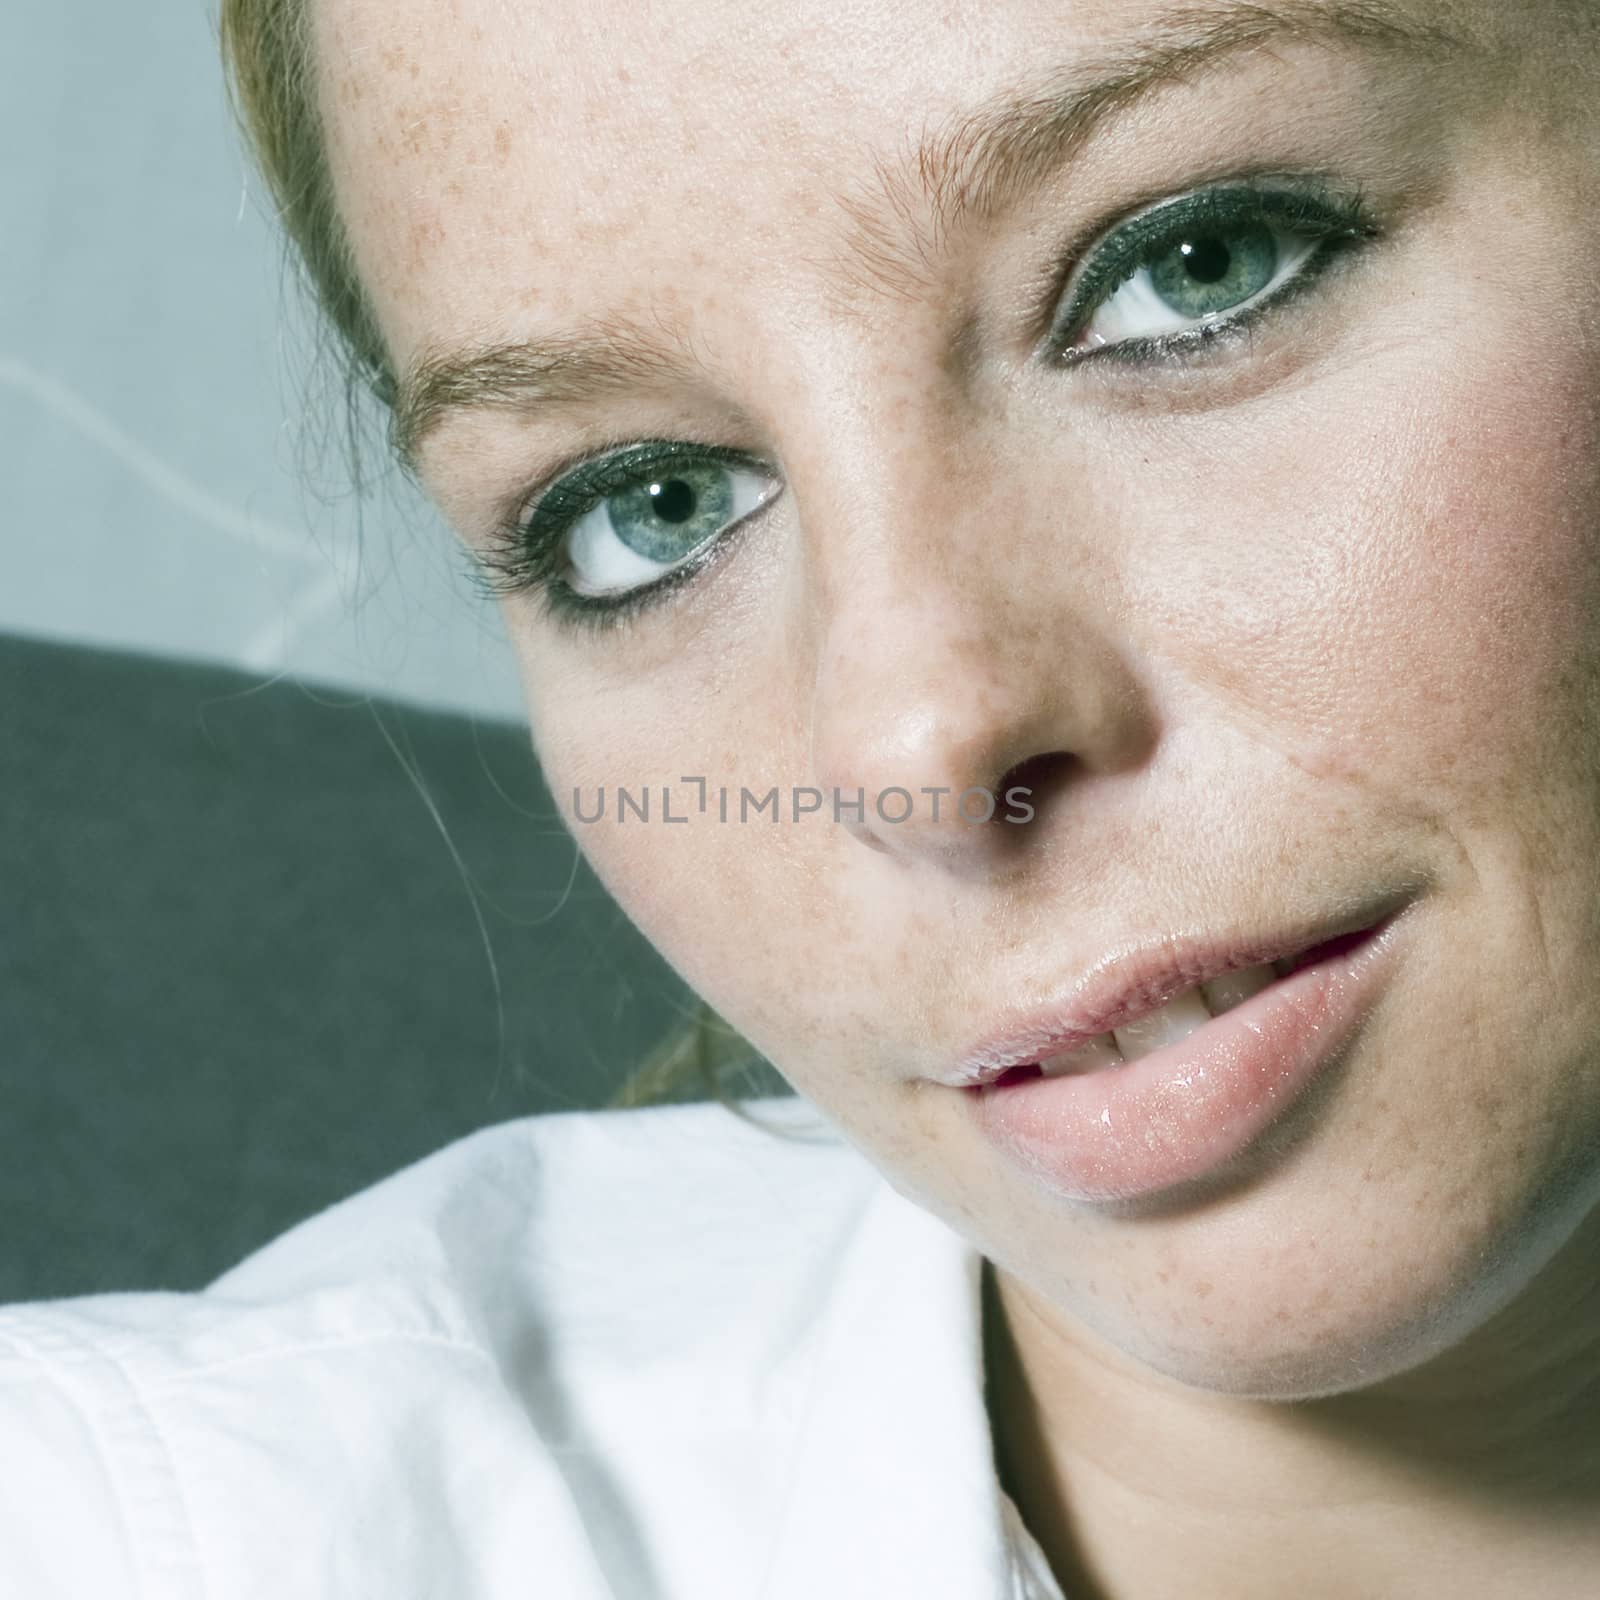 Studio portrait of a beautyfull blond model with green eyes